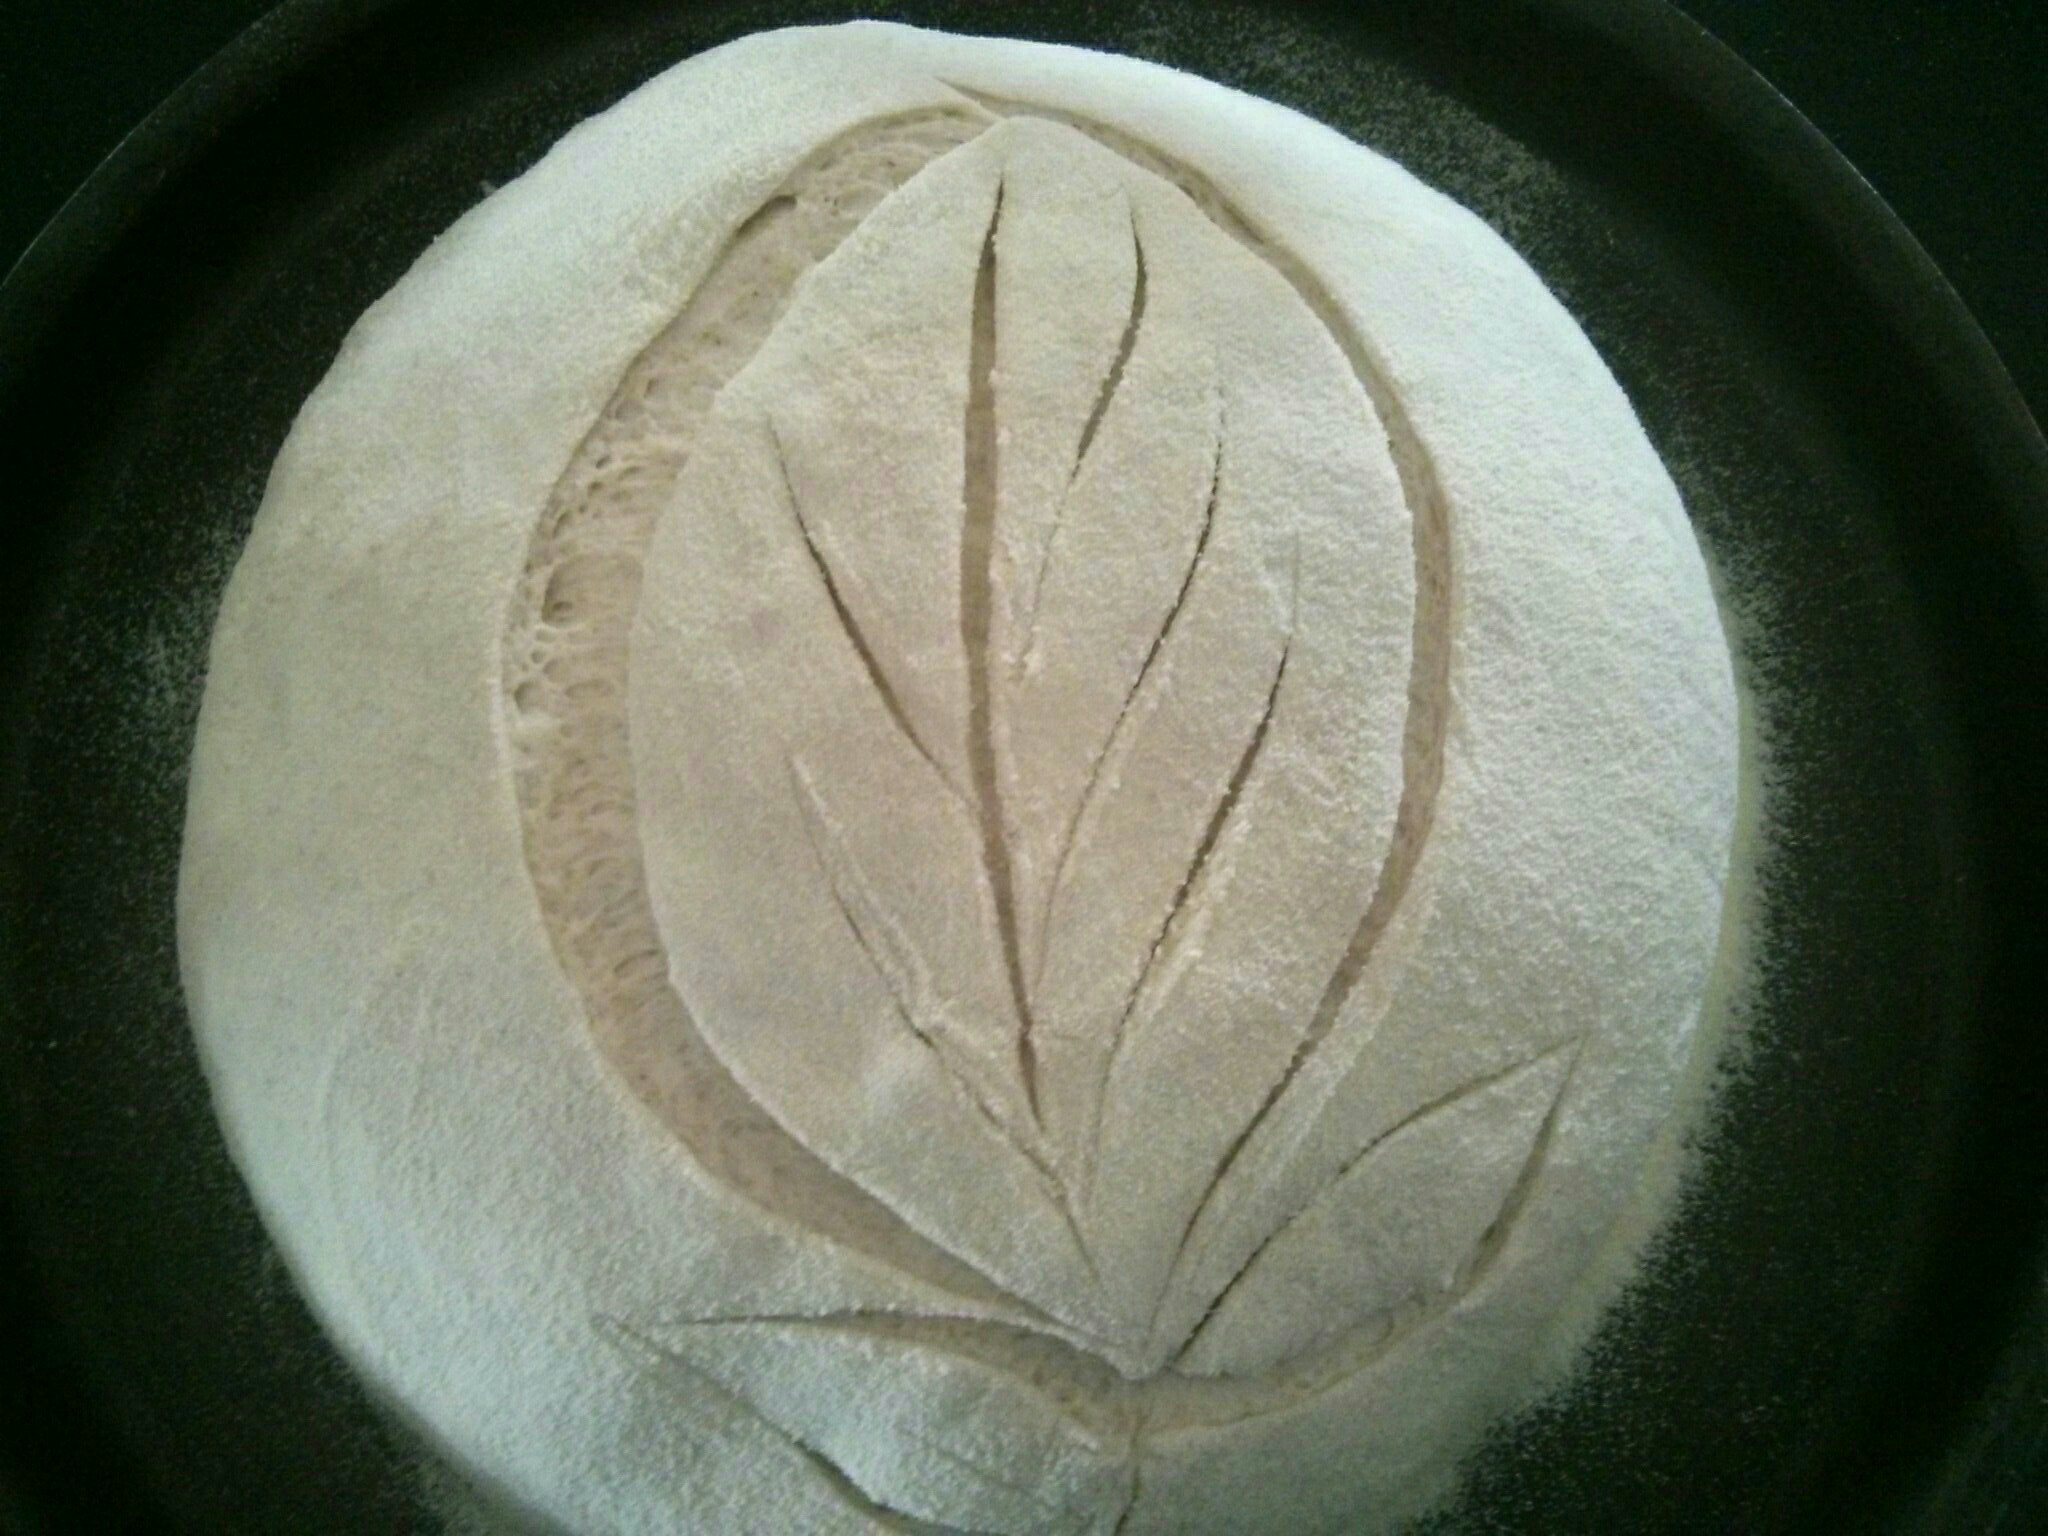 Incisioni su pane - Scoring bread